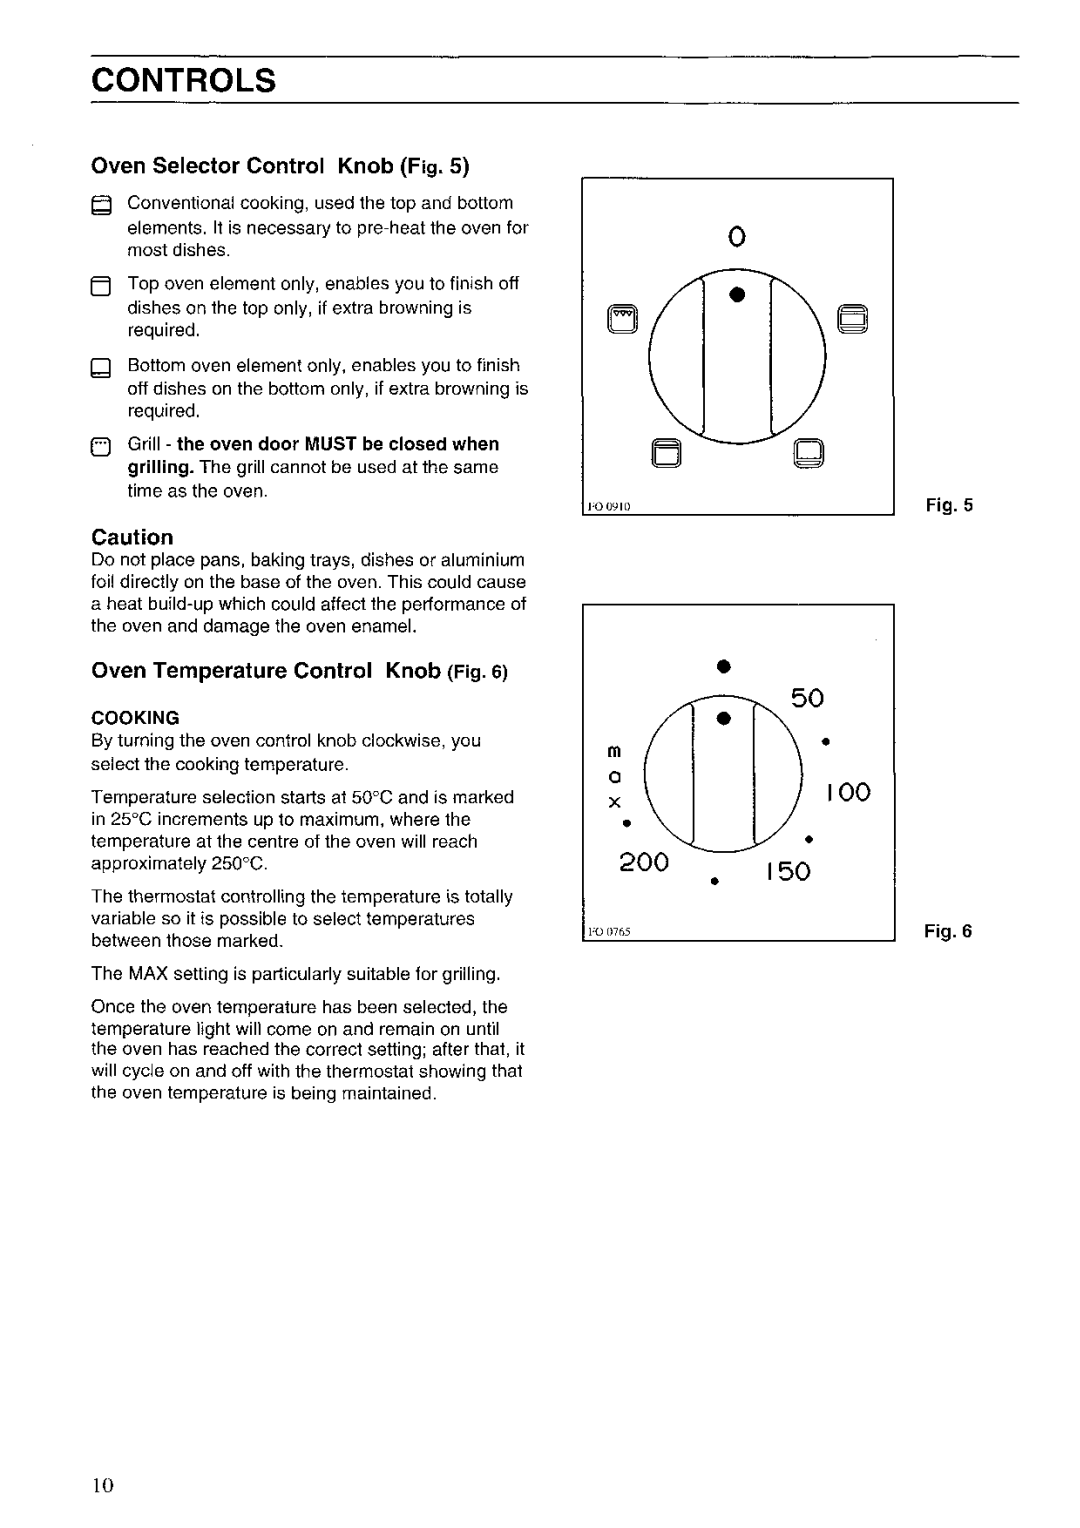 Electrolux MS016 manual 